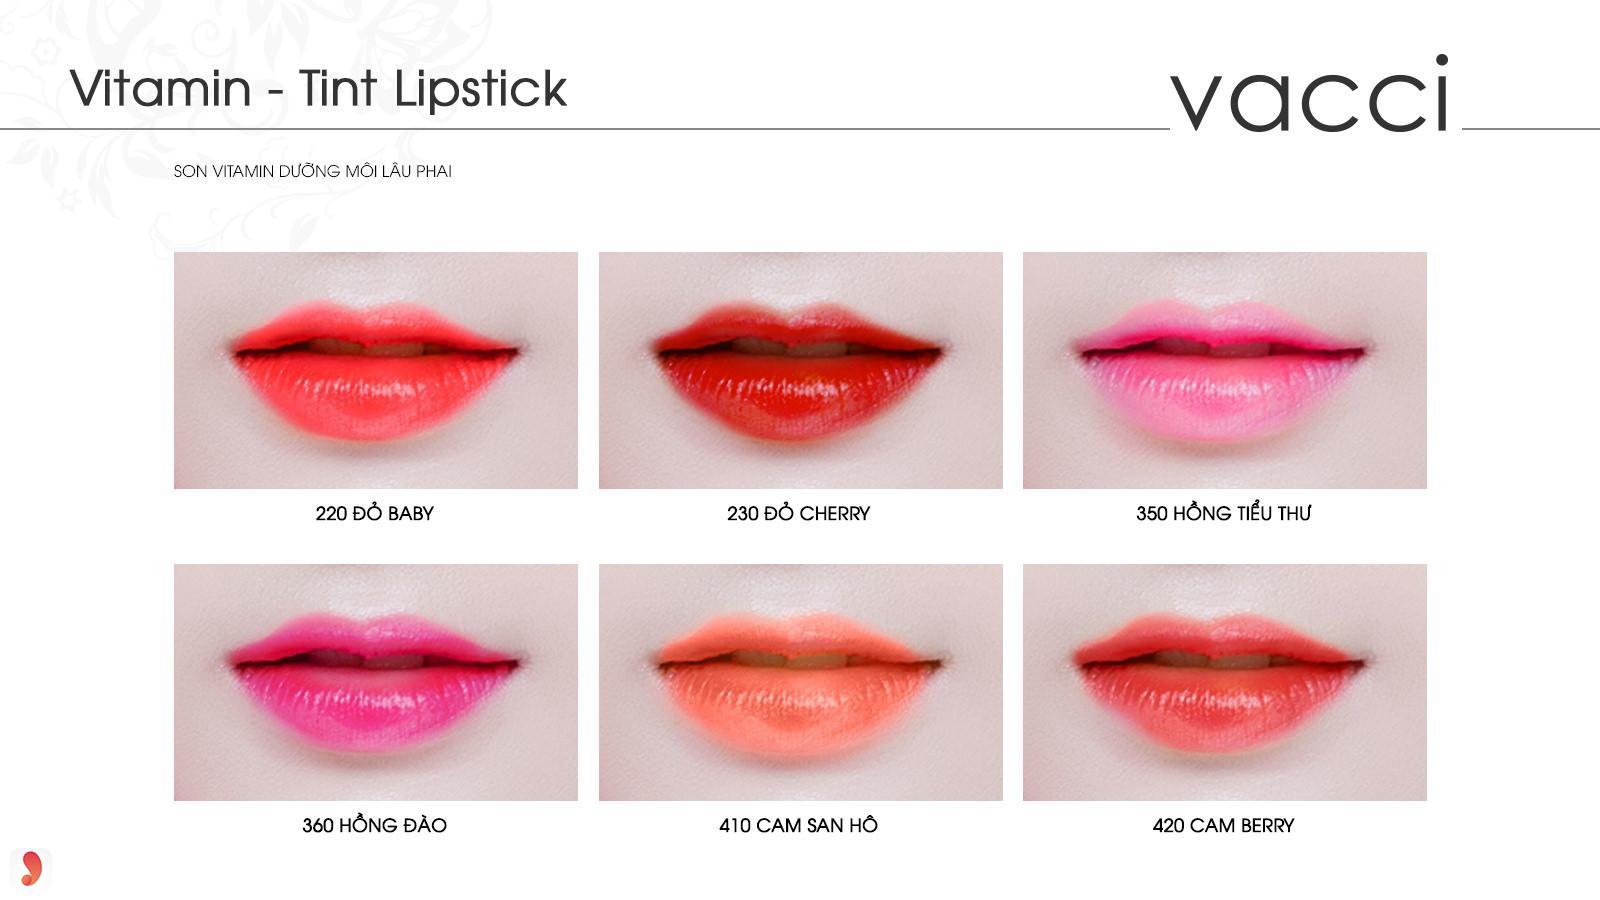 Bảng màu son Vacci Vitamin Tint Lipstick 1